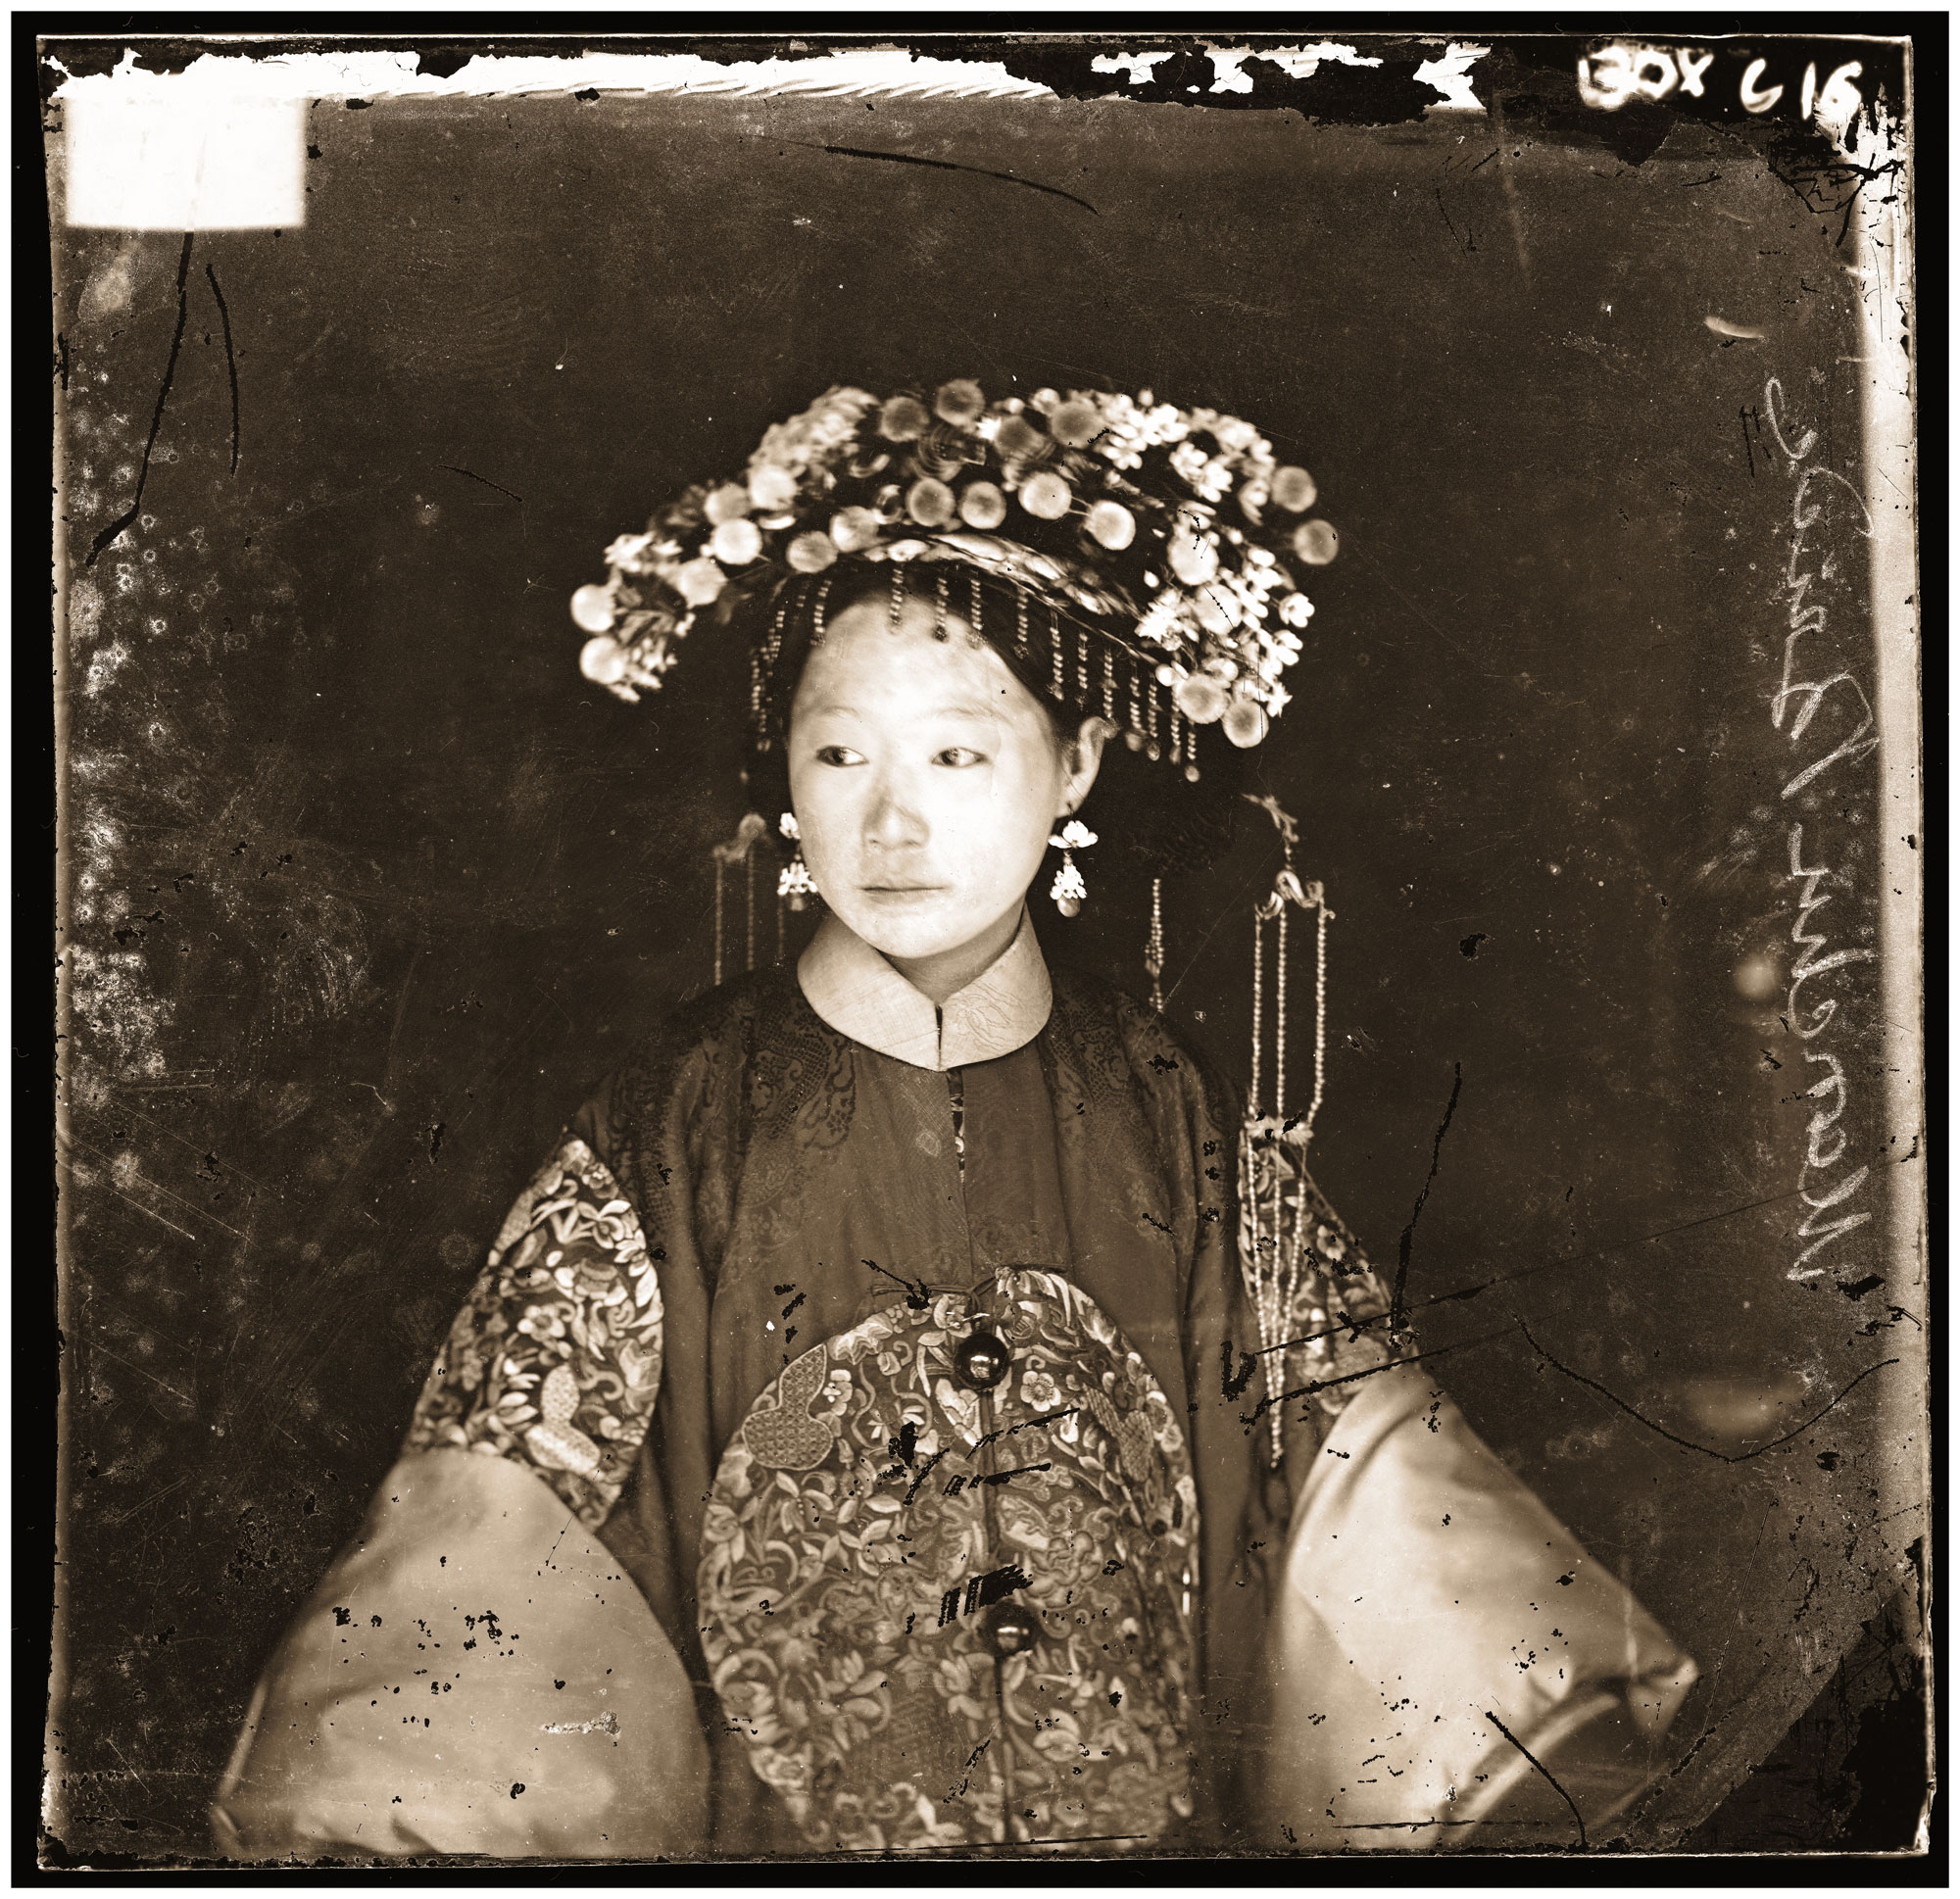 Title: A Manchu Bride 满族新娘 北京